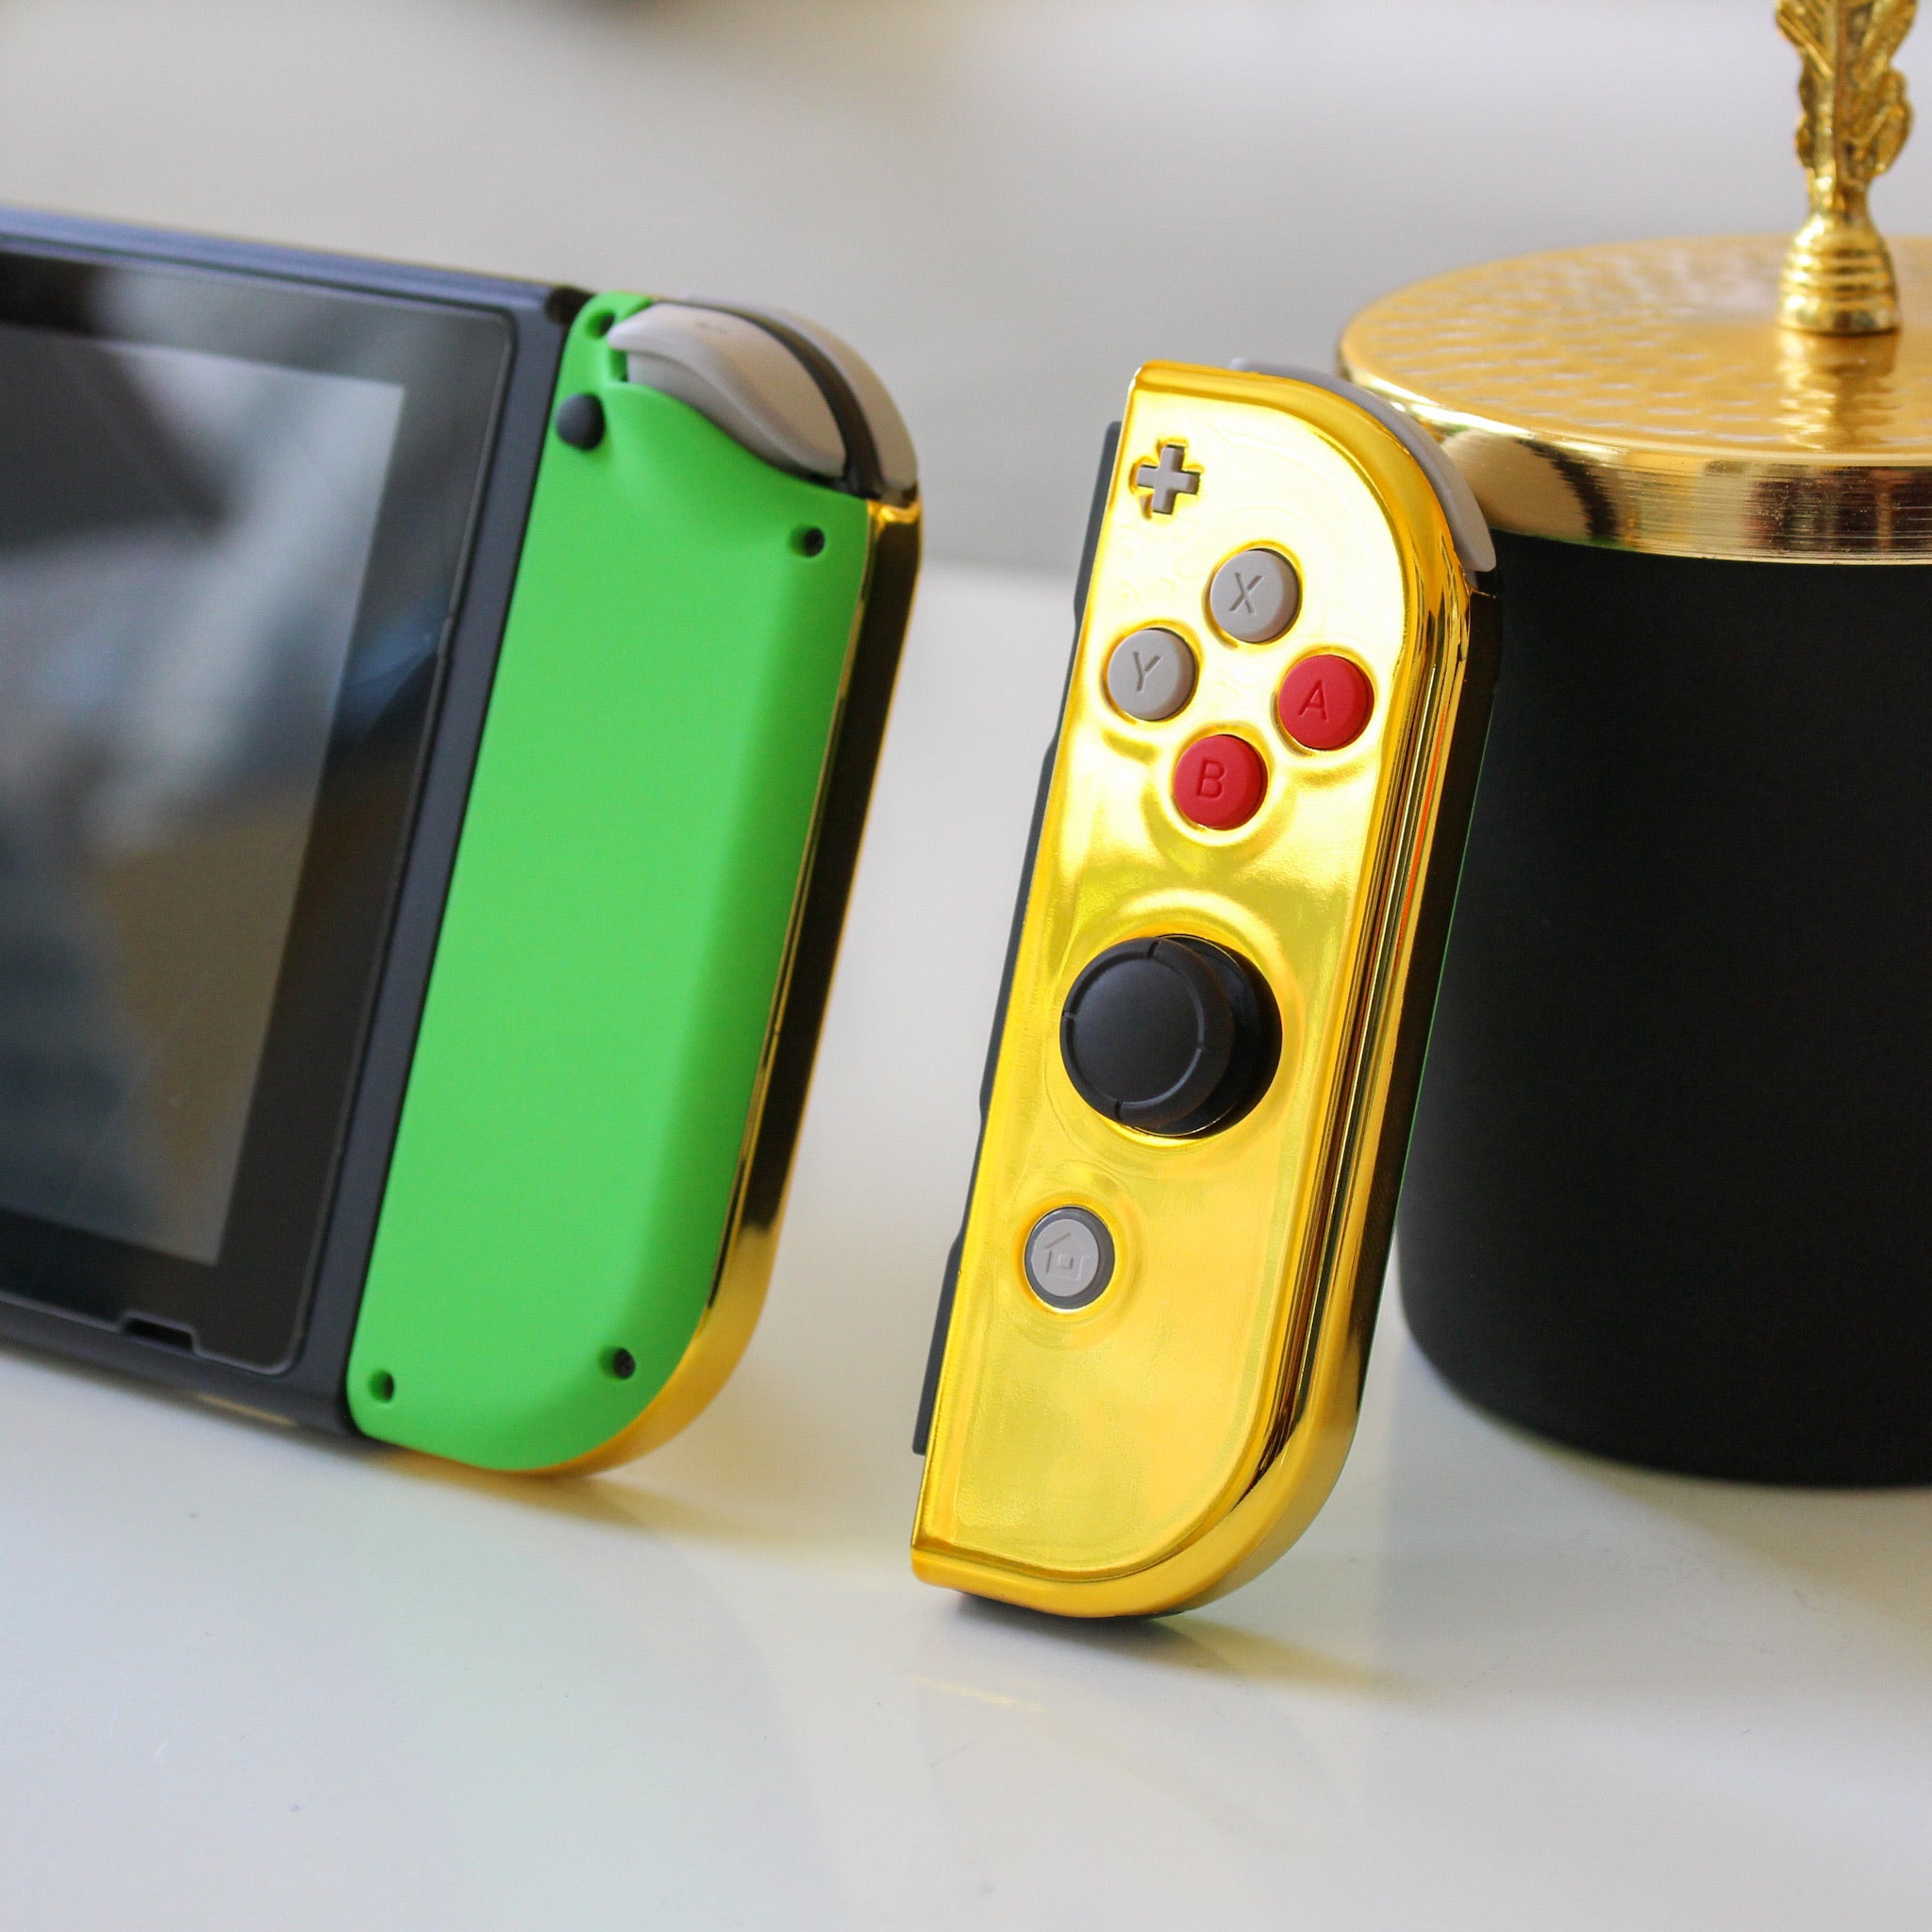 Zelda Nintendo Switch Custom Joy-Con's Controllers Unique Design